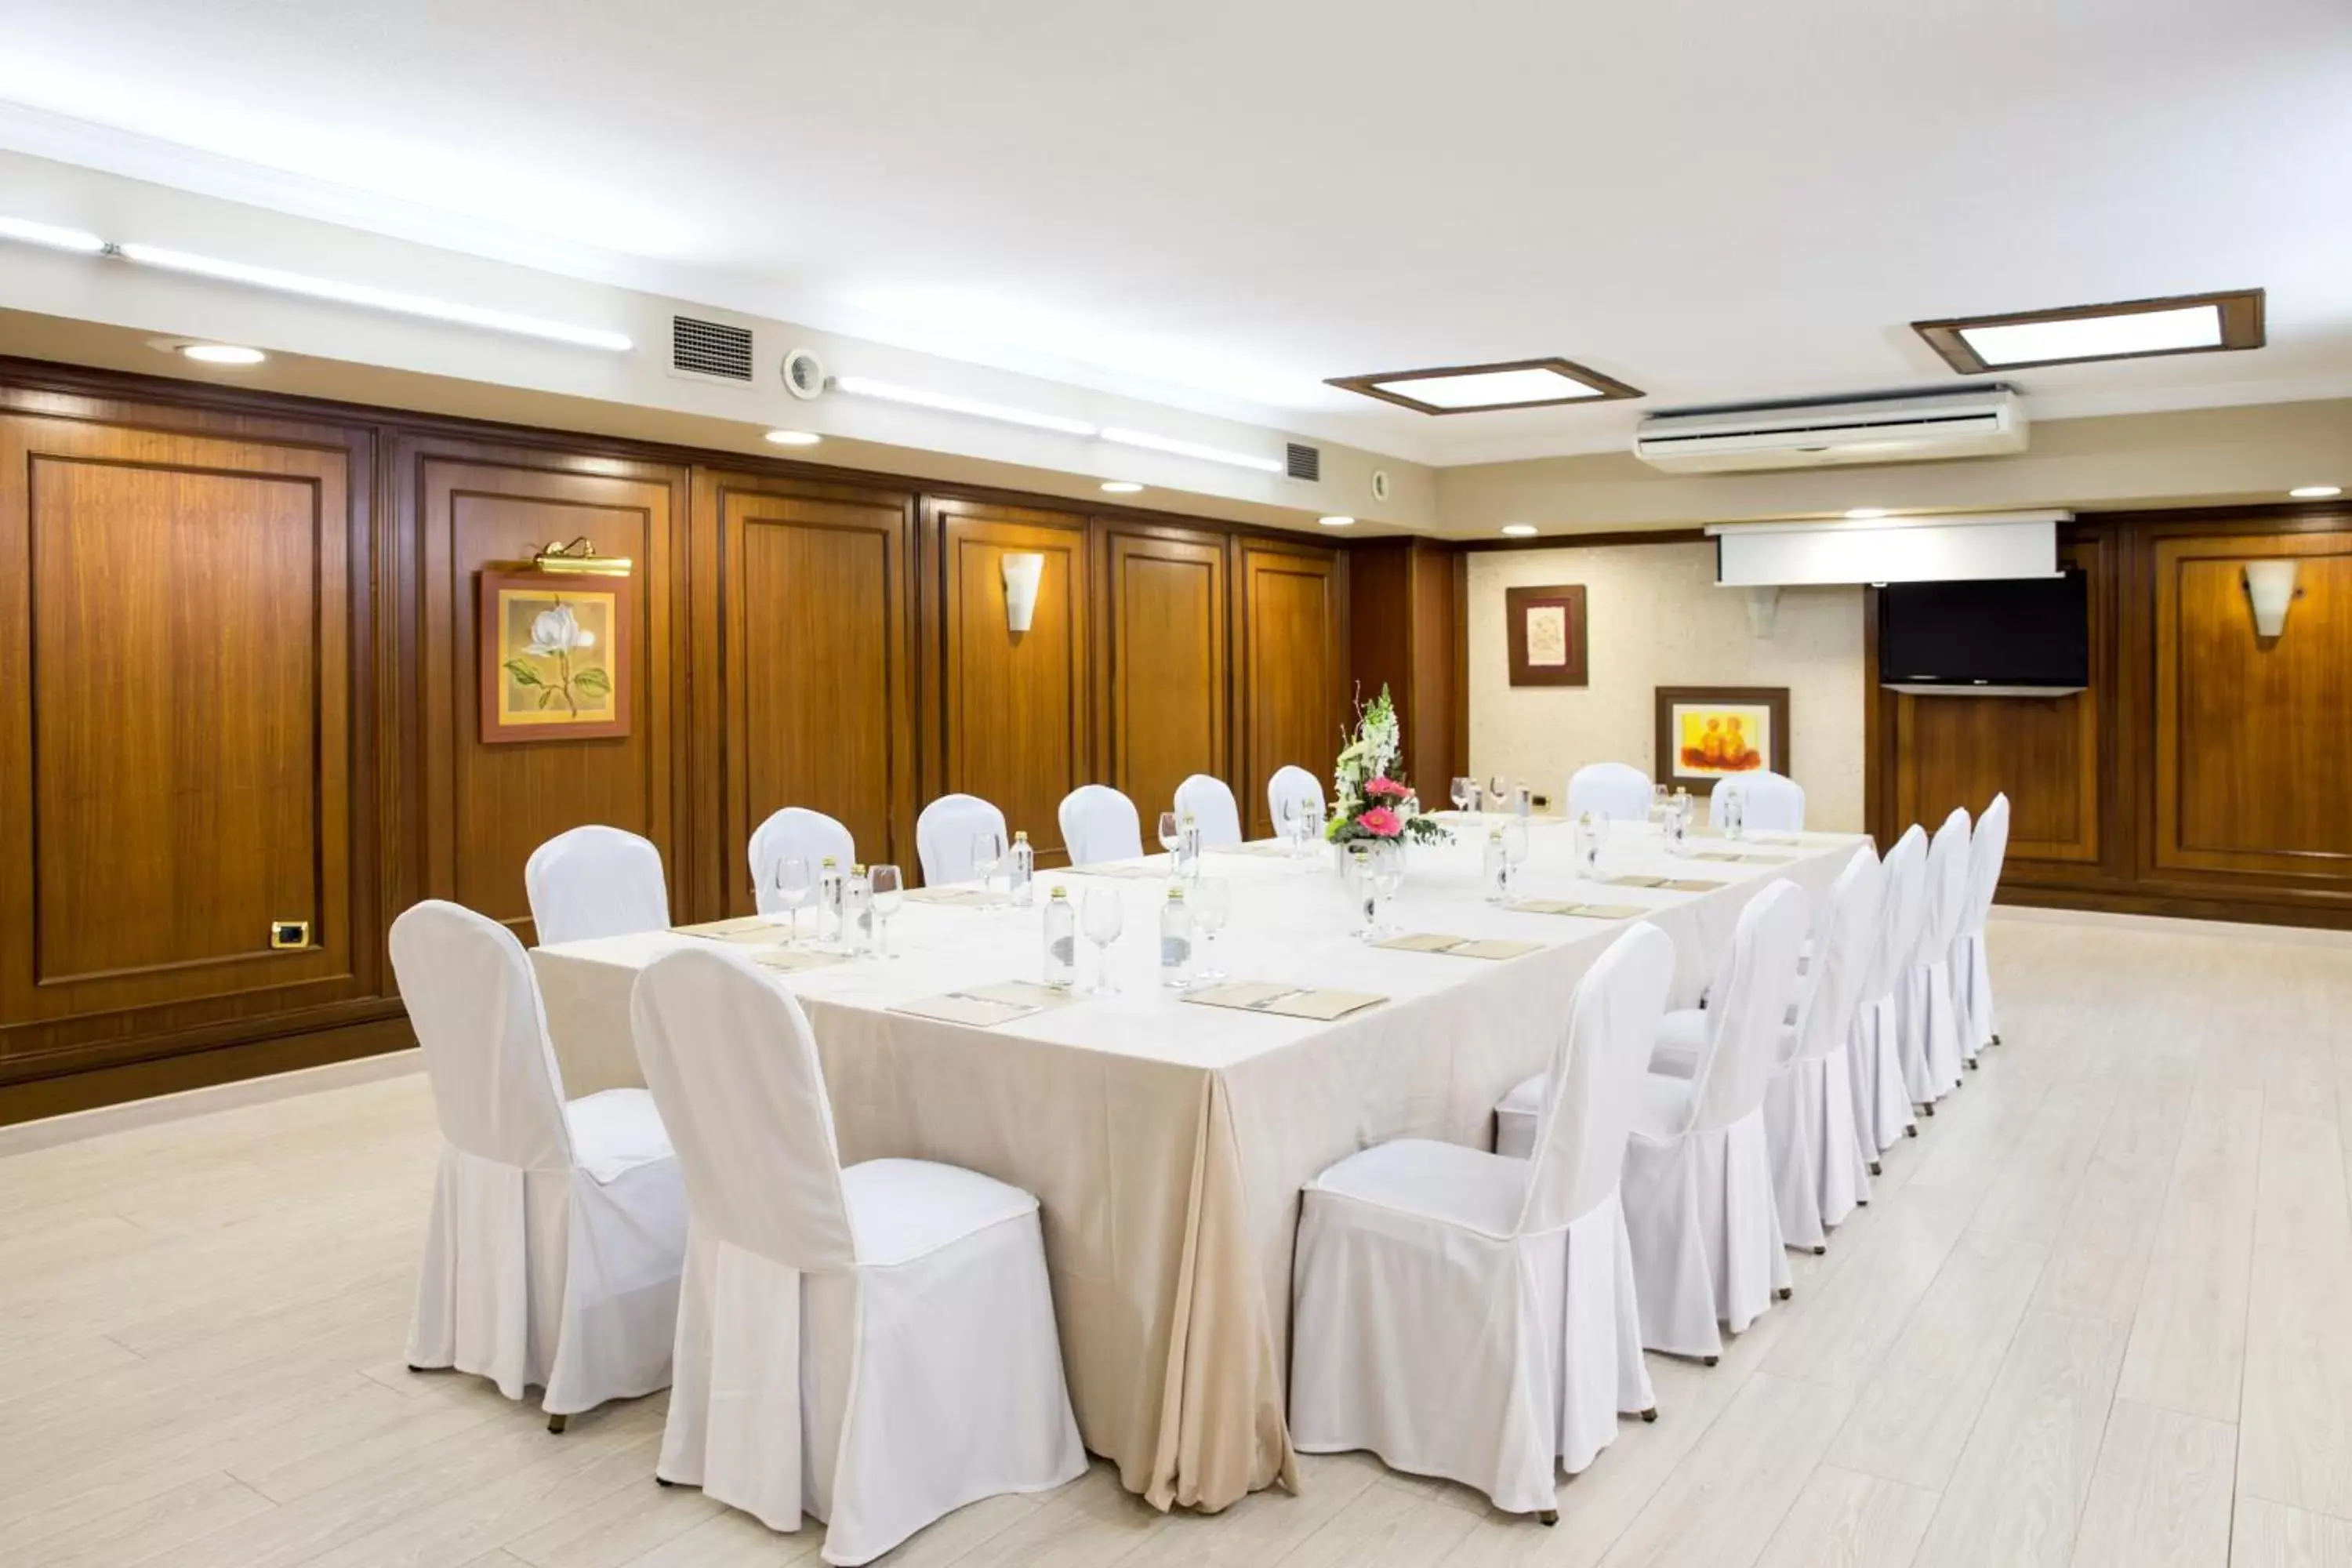 Meeting/conference room in Oca Ipanema Hotel